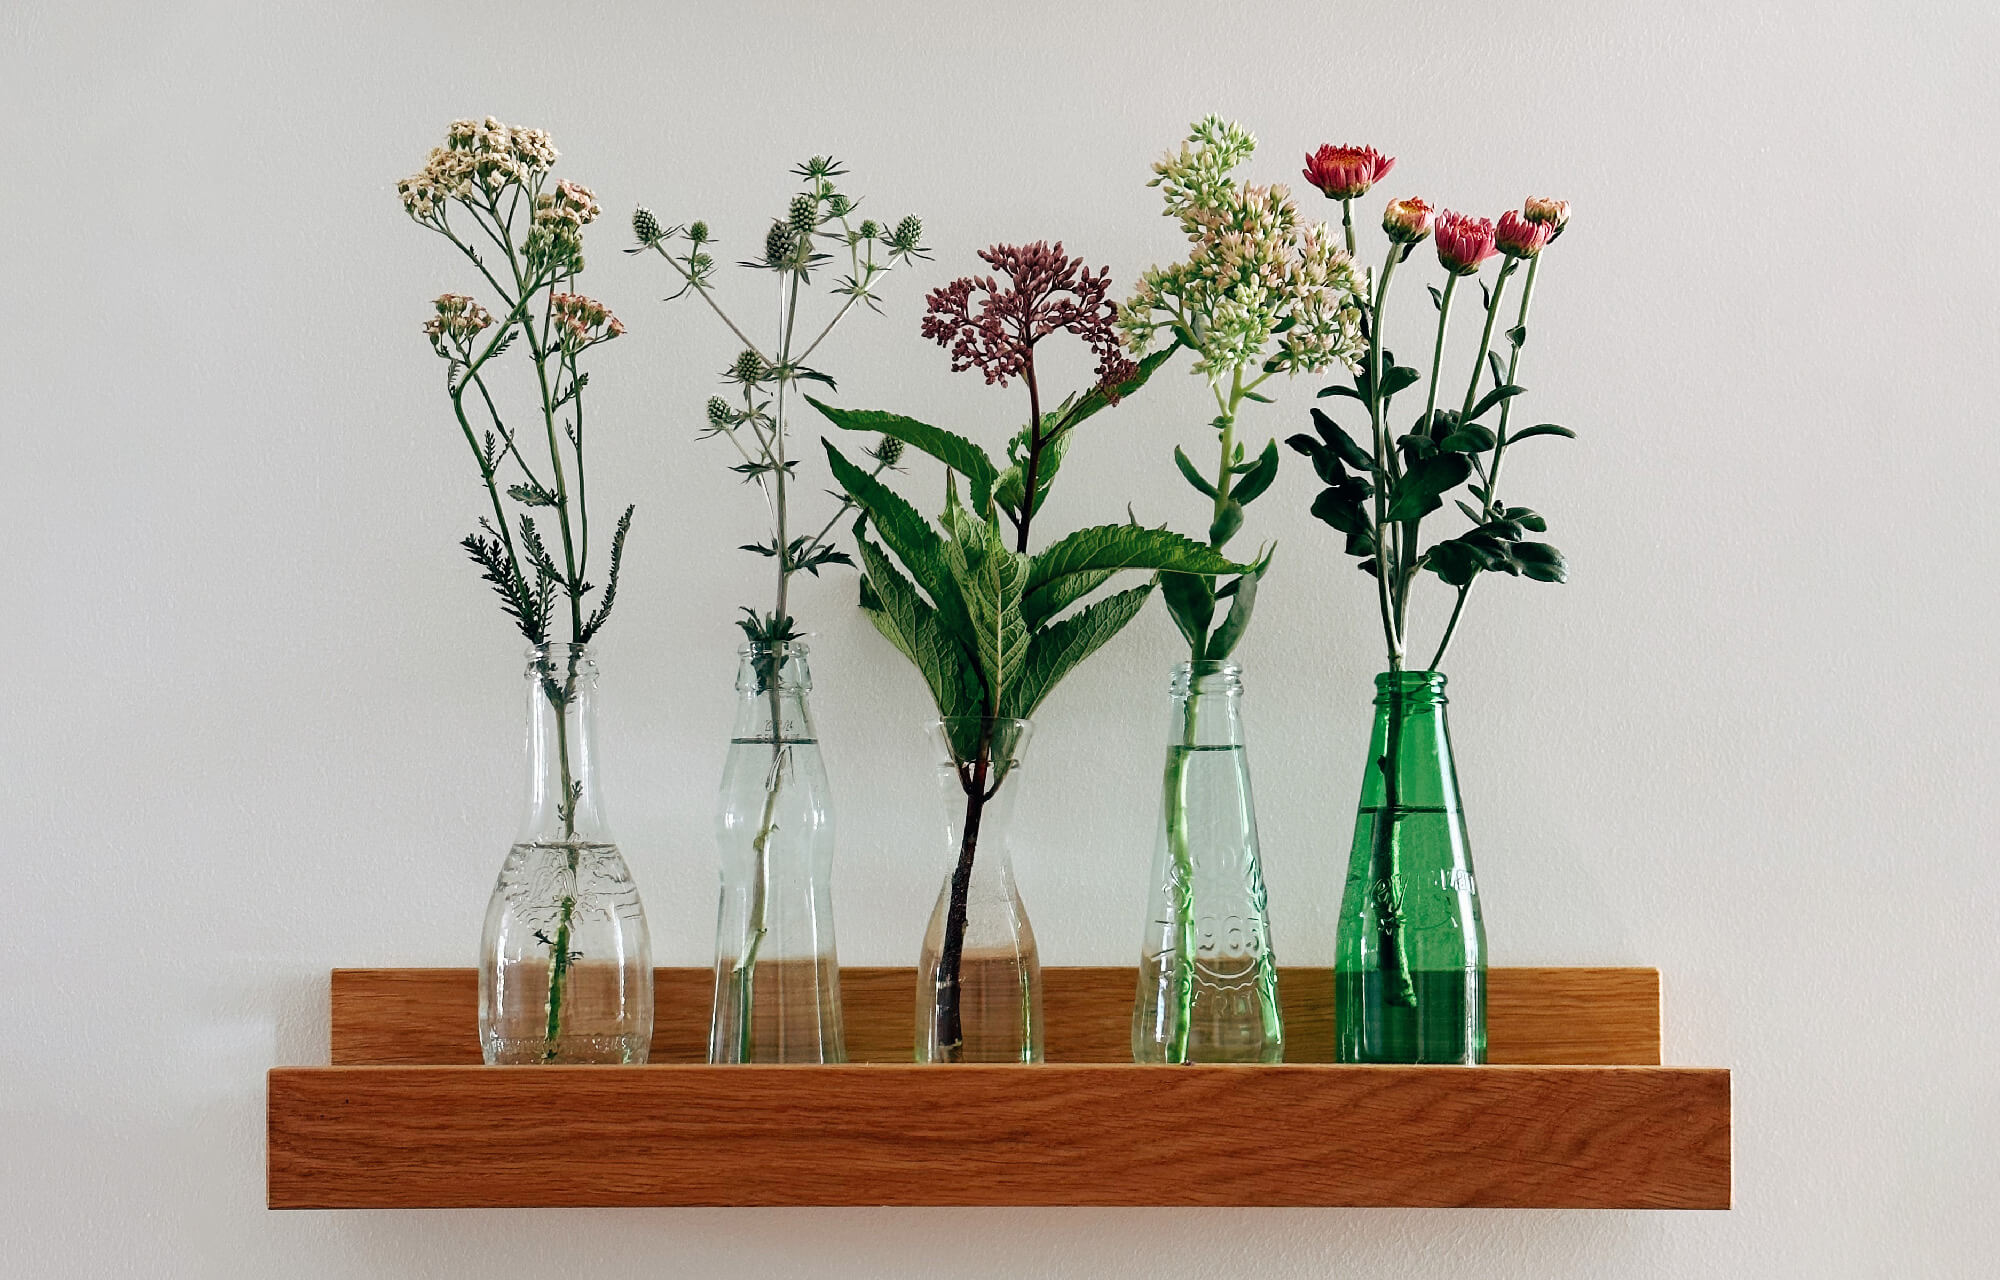 Matthias Maier | Stories | Single flowers in small bottles